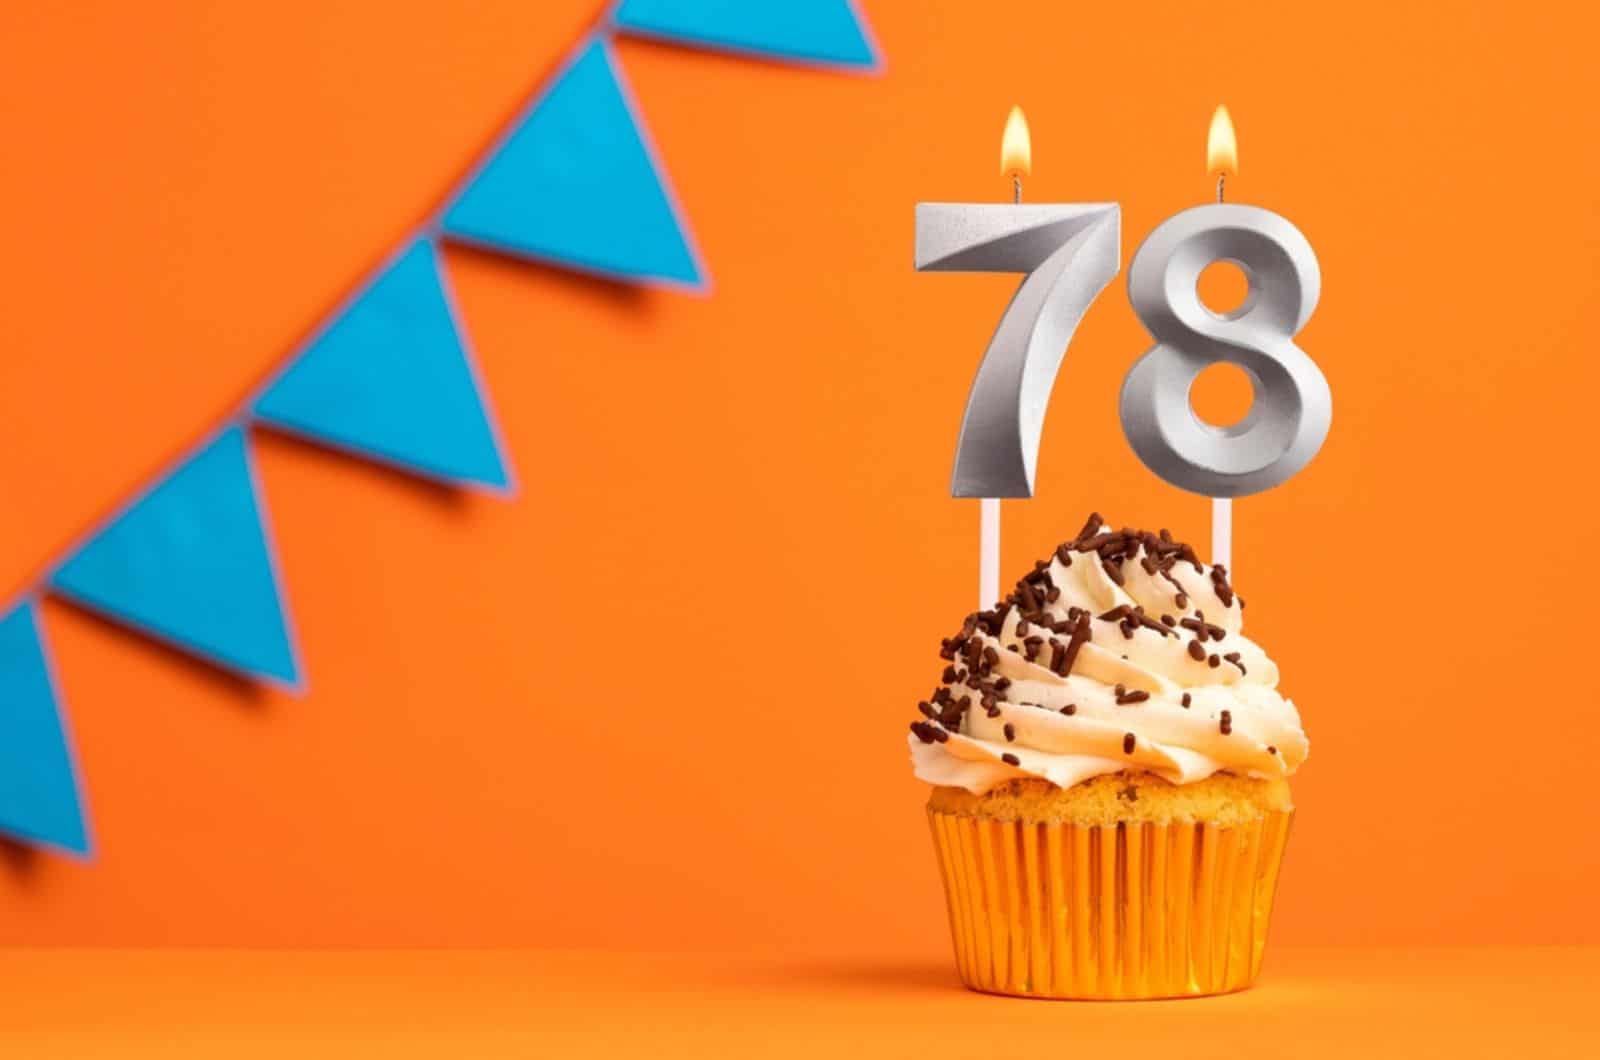 78 birthday wishes